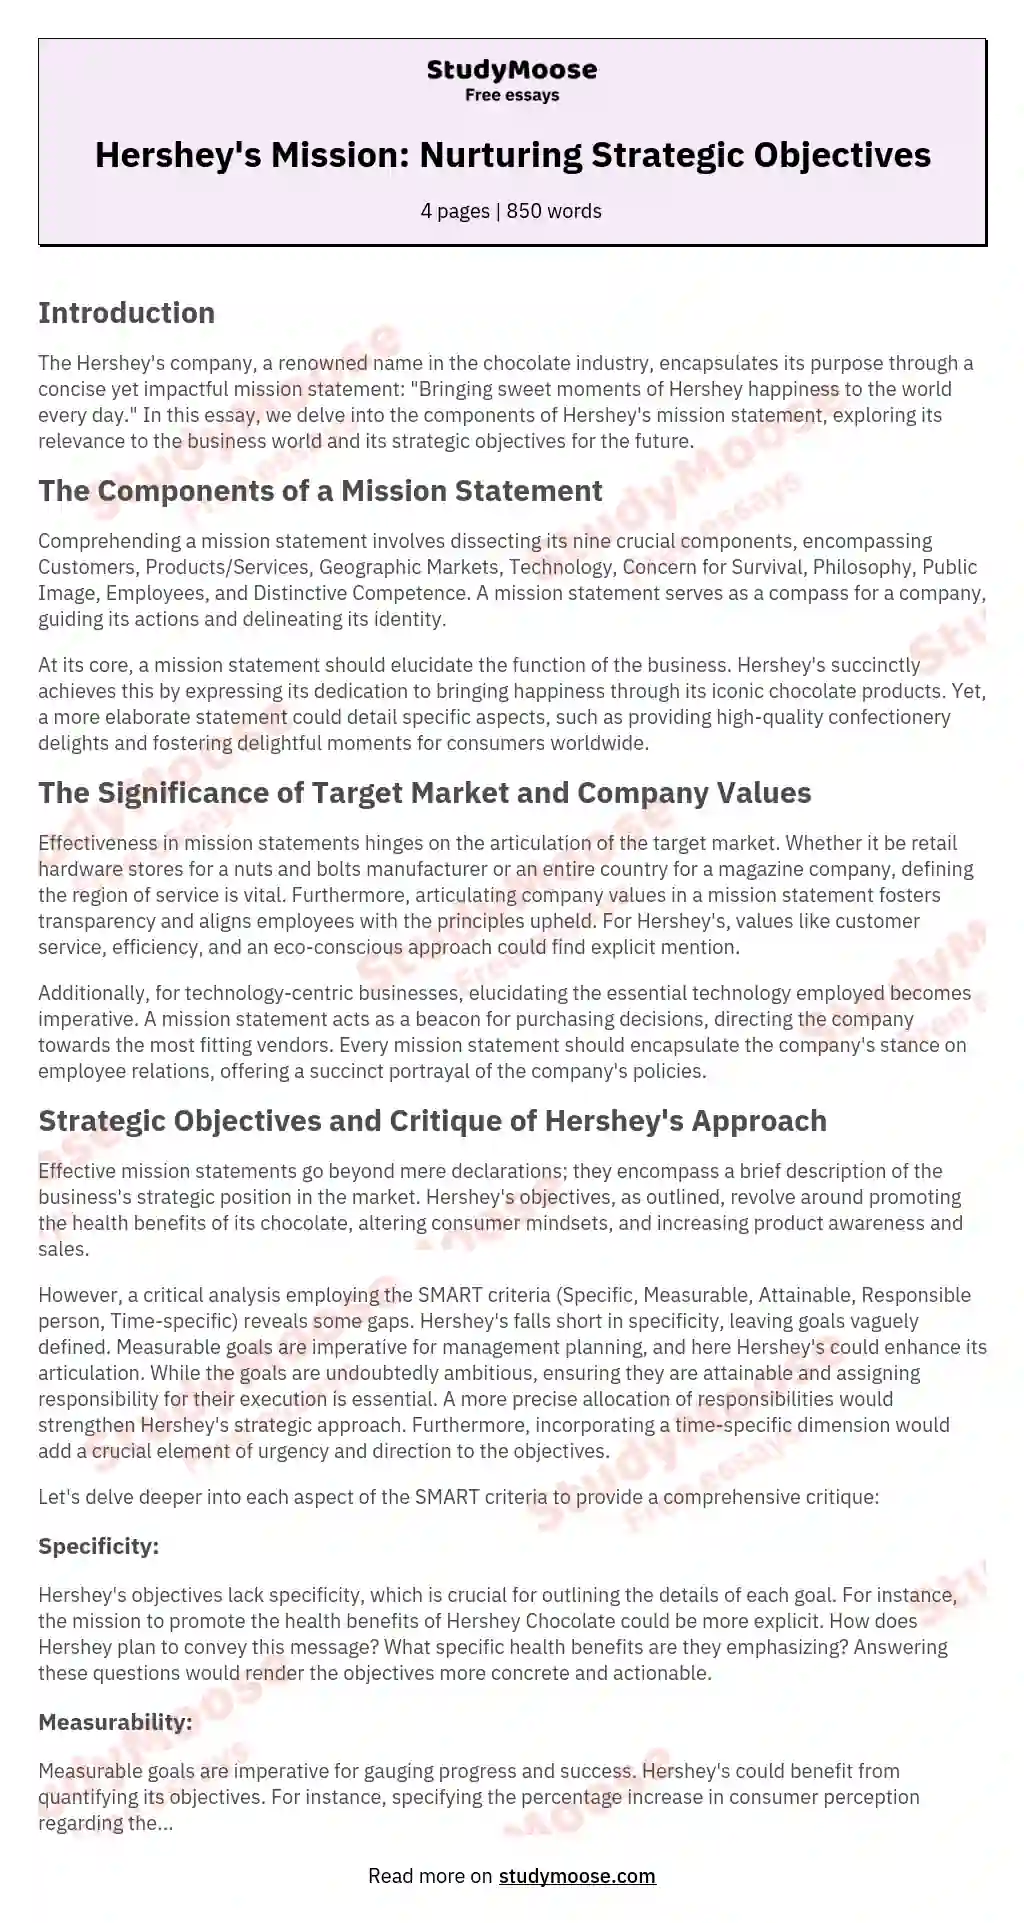 Hershey's Mission: Nurturing Strategic Objectives essay